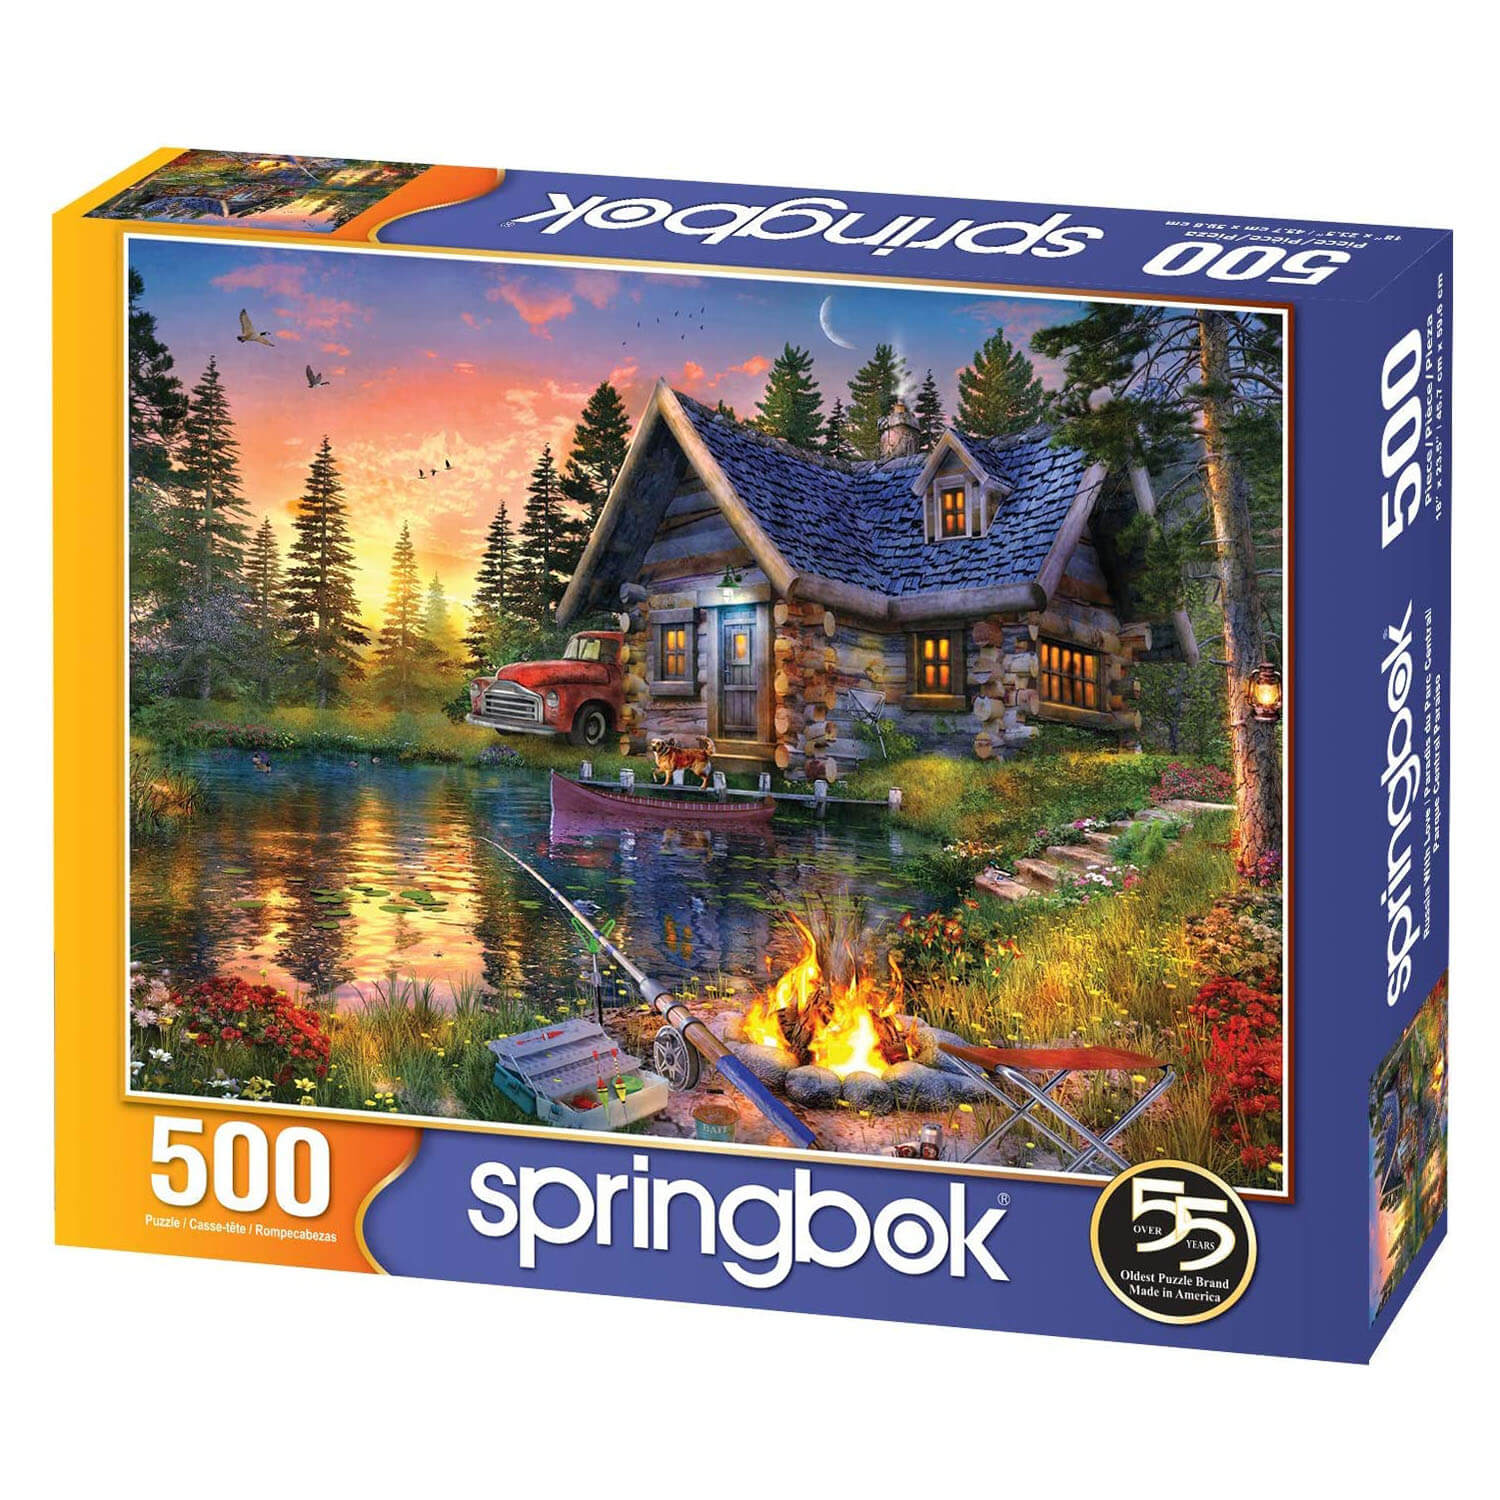 Springbok Sun Kissed Cabin 500 Piece Jigsaw Puzzle